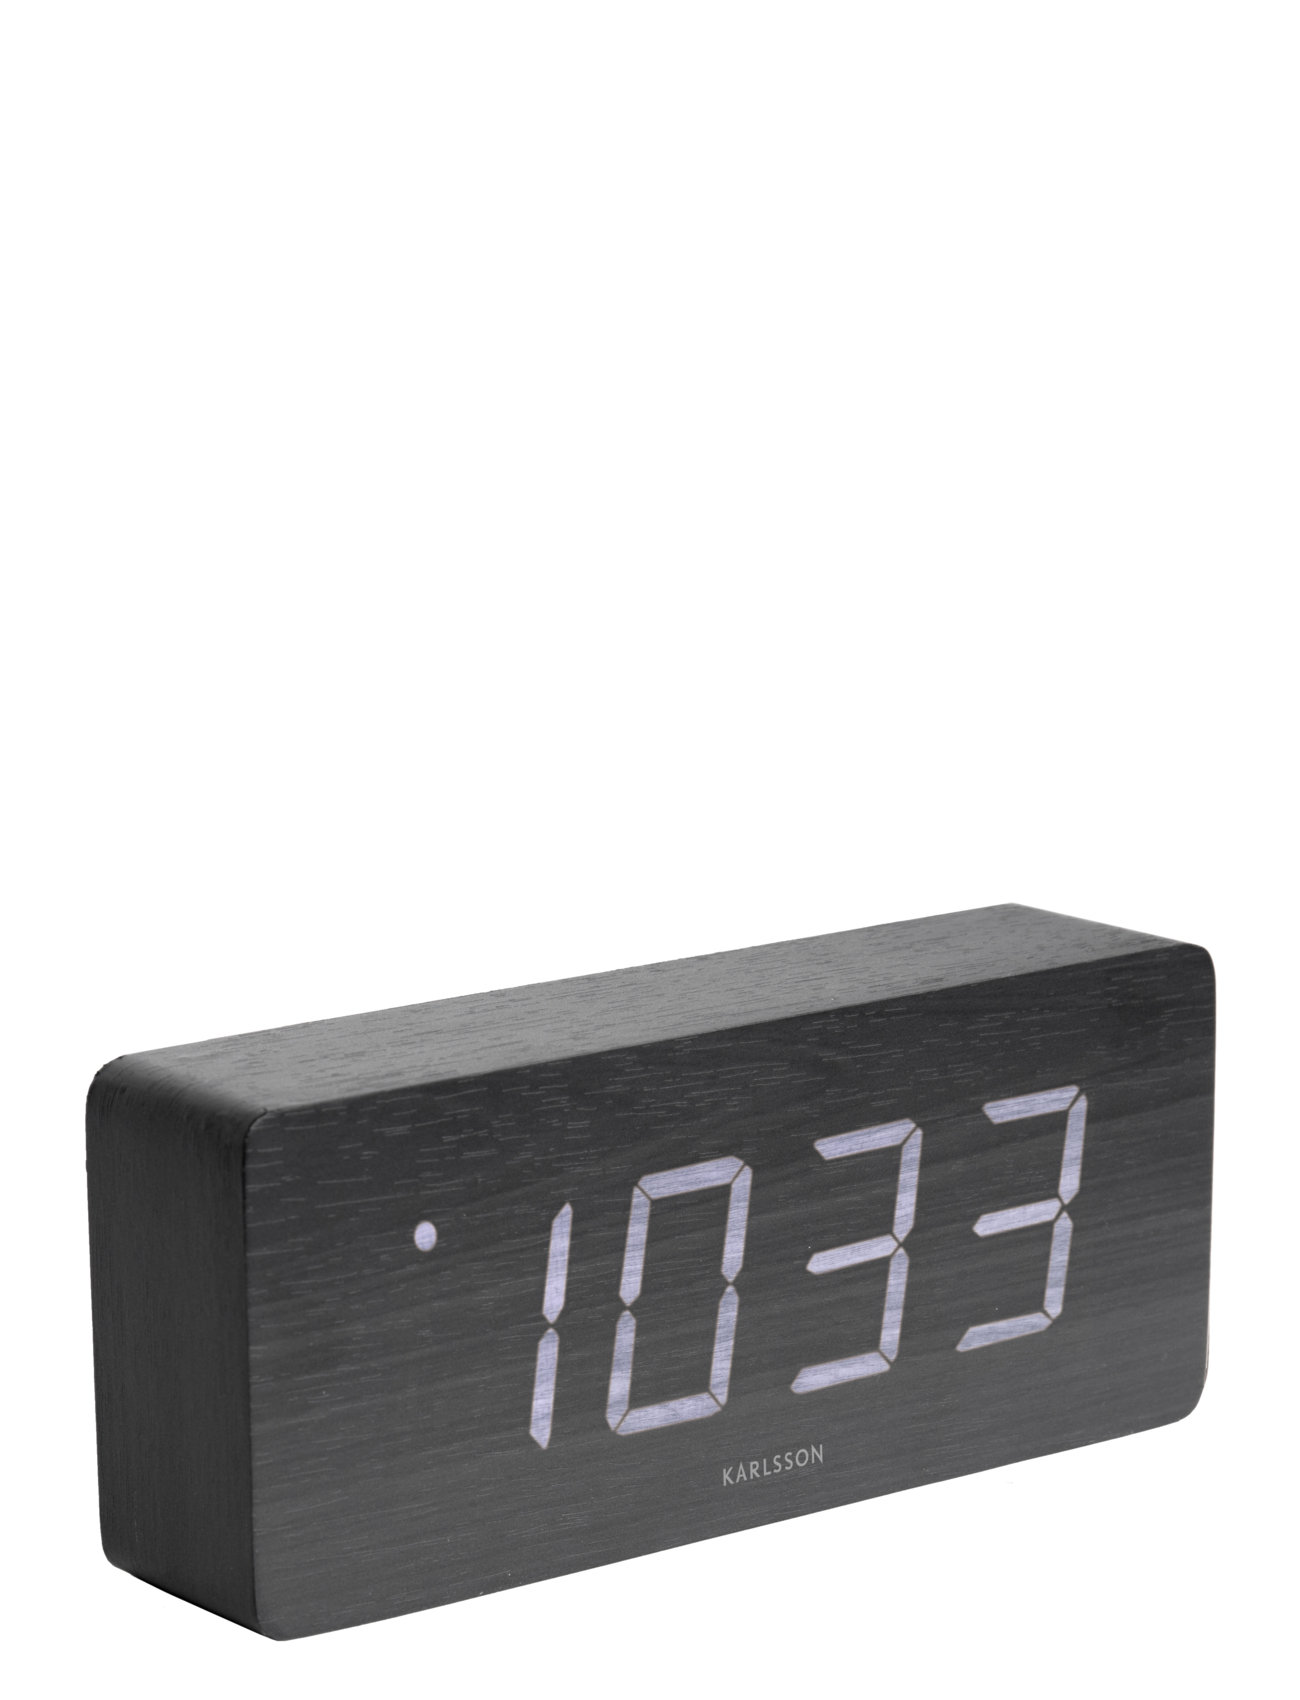 Alarm Clock Tube Home Decoration Watches Alarm Clocks Black KARLSSON